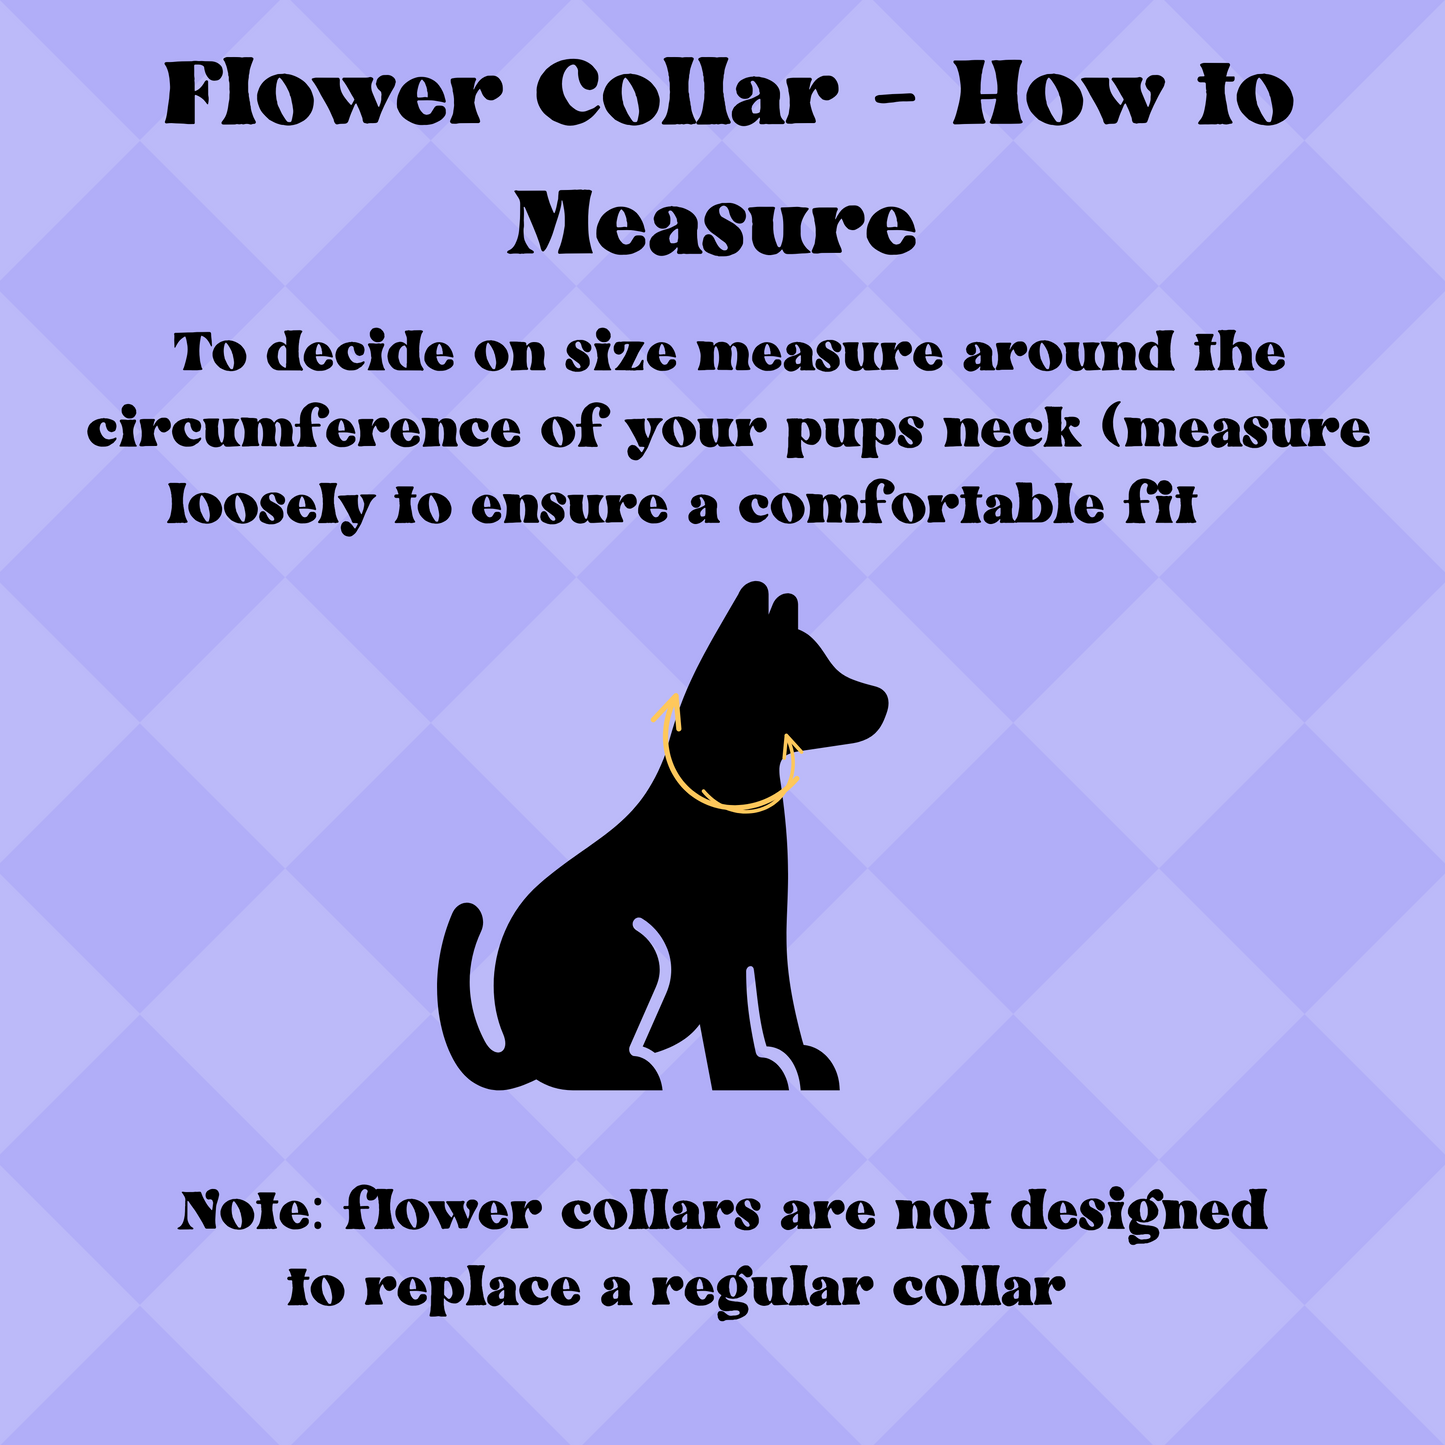 Let it Snow Dog Flower Crown/Collar